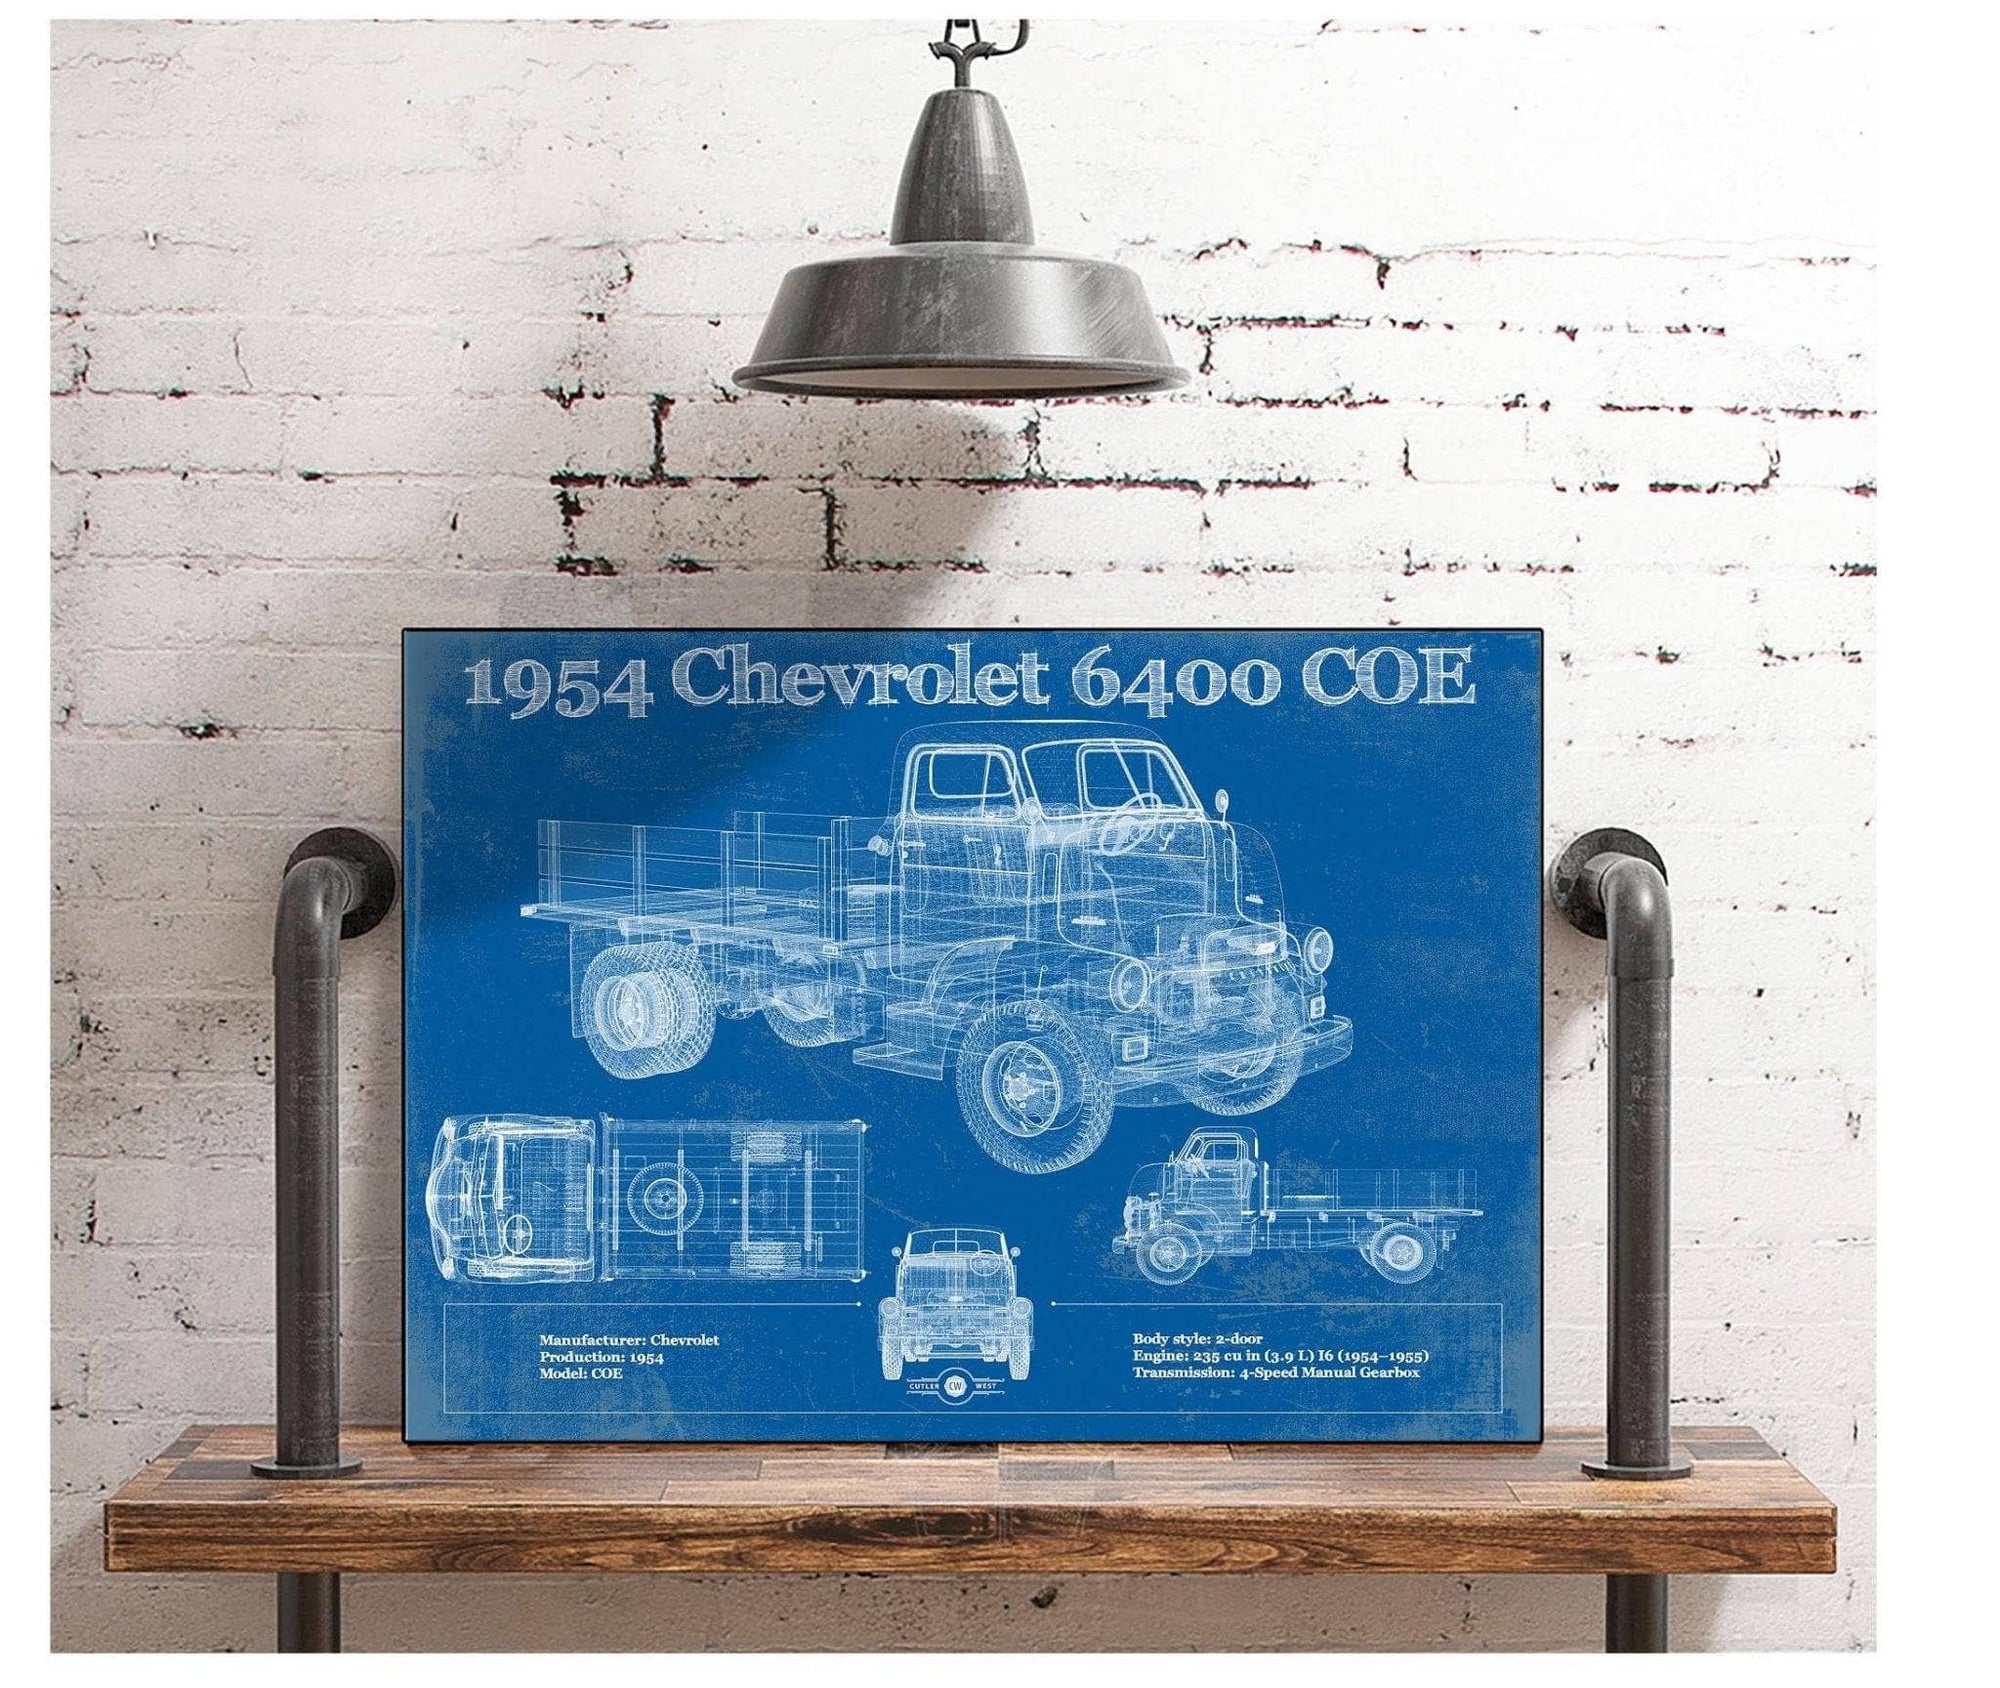 Cutler West Chevy 6400 COE  1954 Flat Bed Truck Vintage Blueprint Art